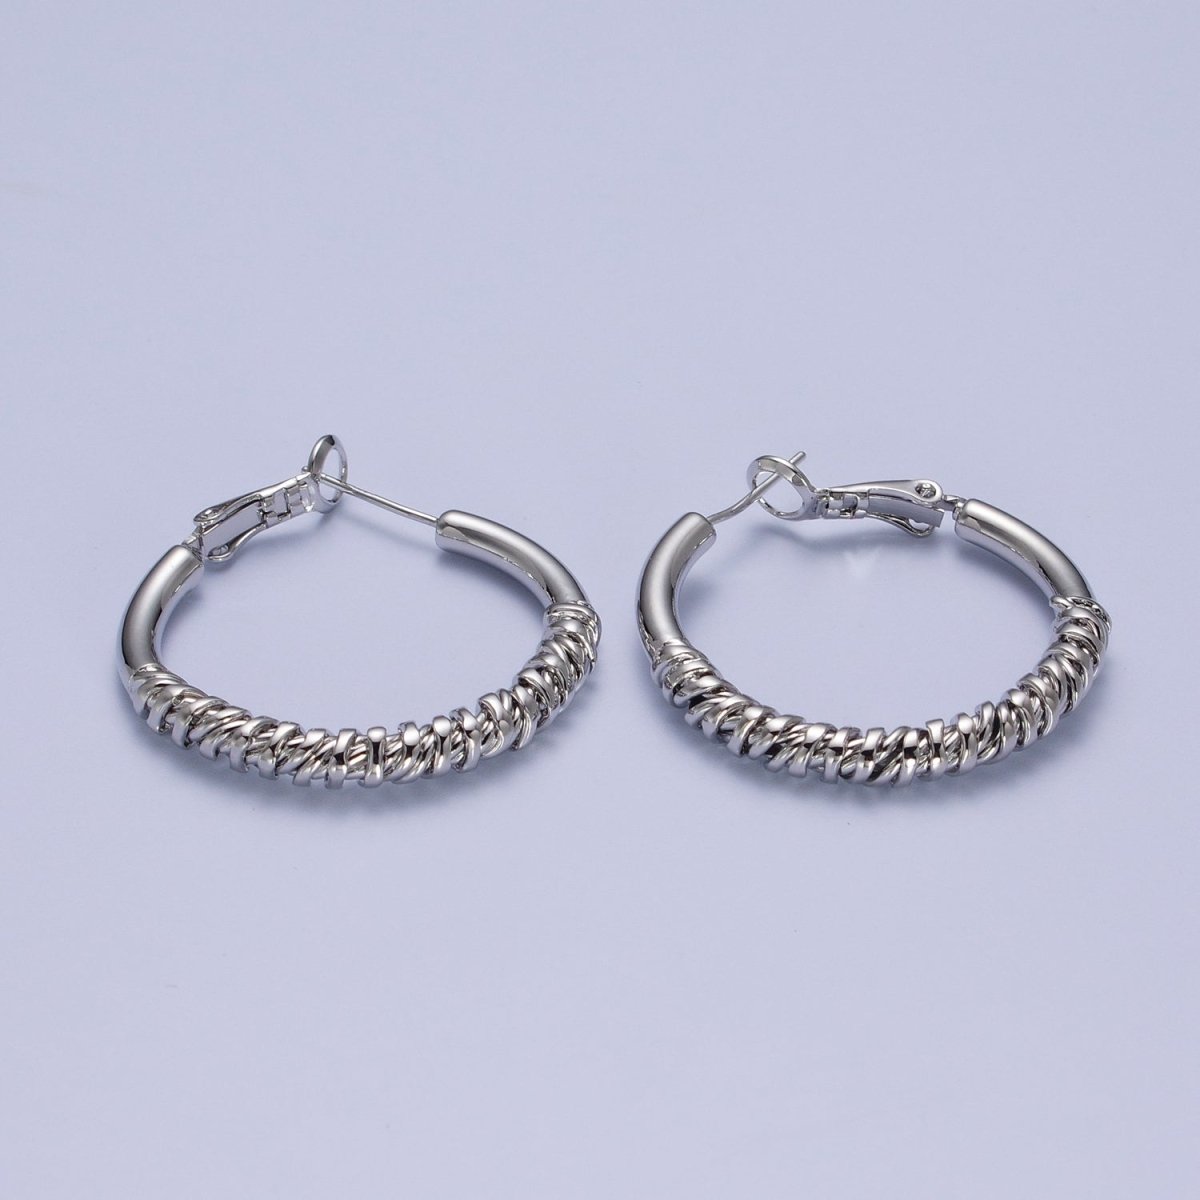 Gold / Silver Round Half Spiral Cord Geometric Hoops Earrings | AE1093 AE1094 - DLUXCA